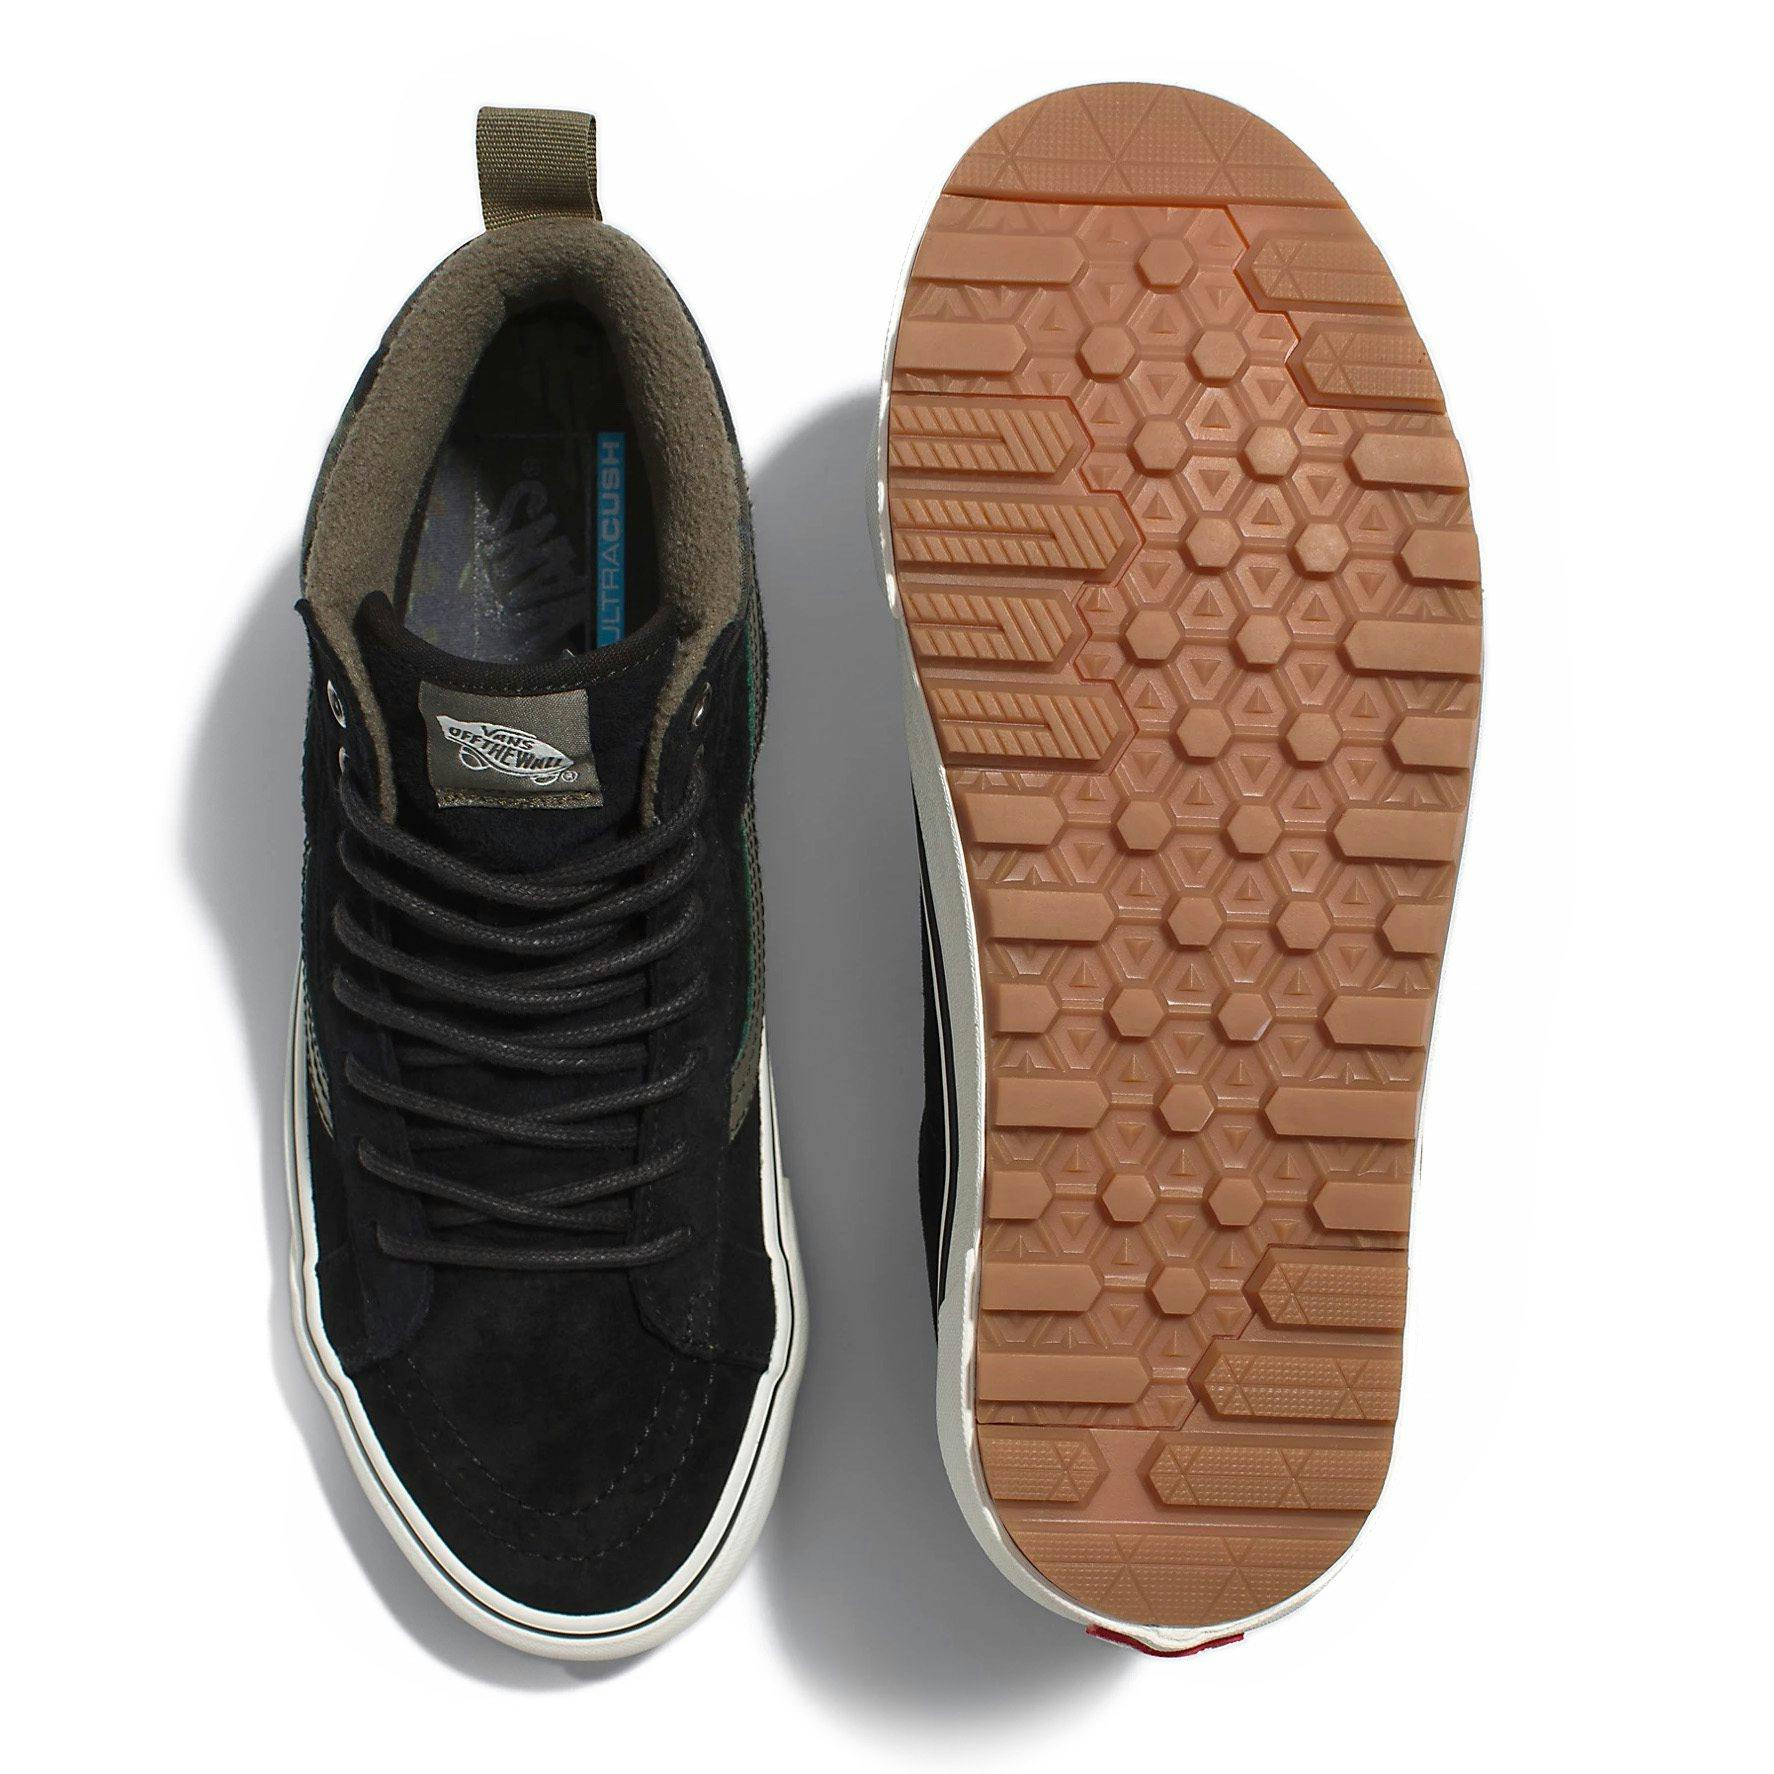 Vans SK8-Hi MTE-1 Sneaker Boot Huckberry - Black/Marshmellow Sneakers Trail | 